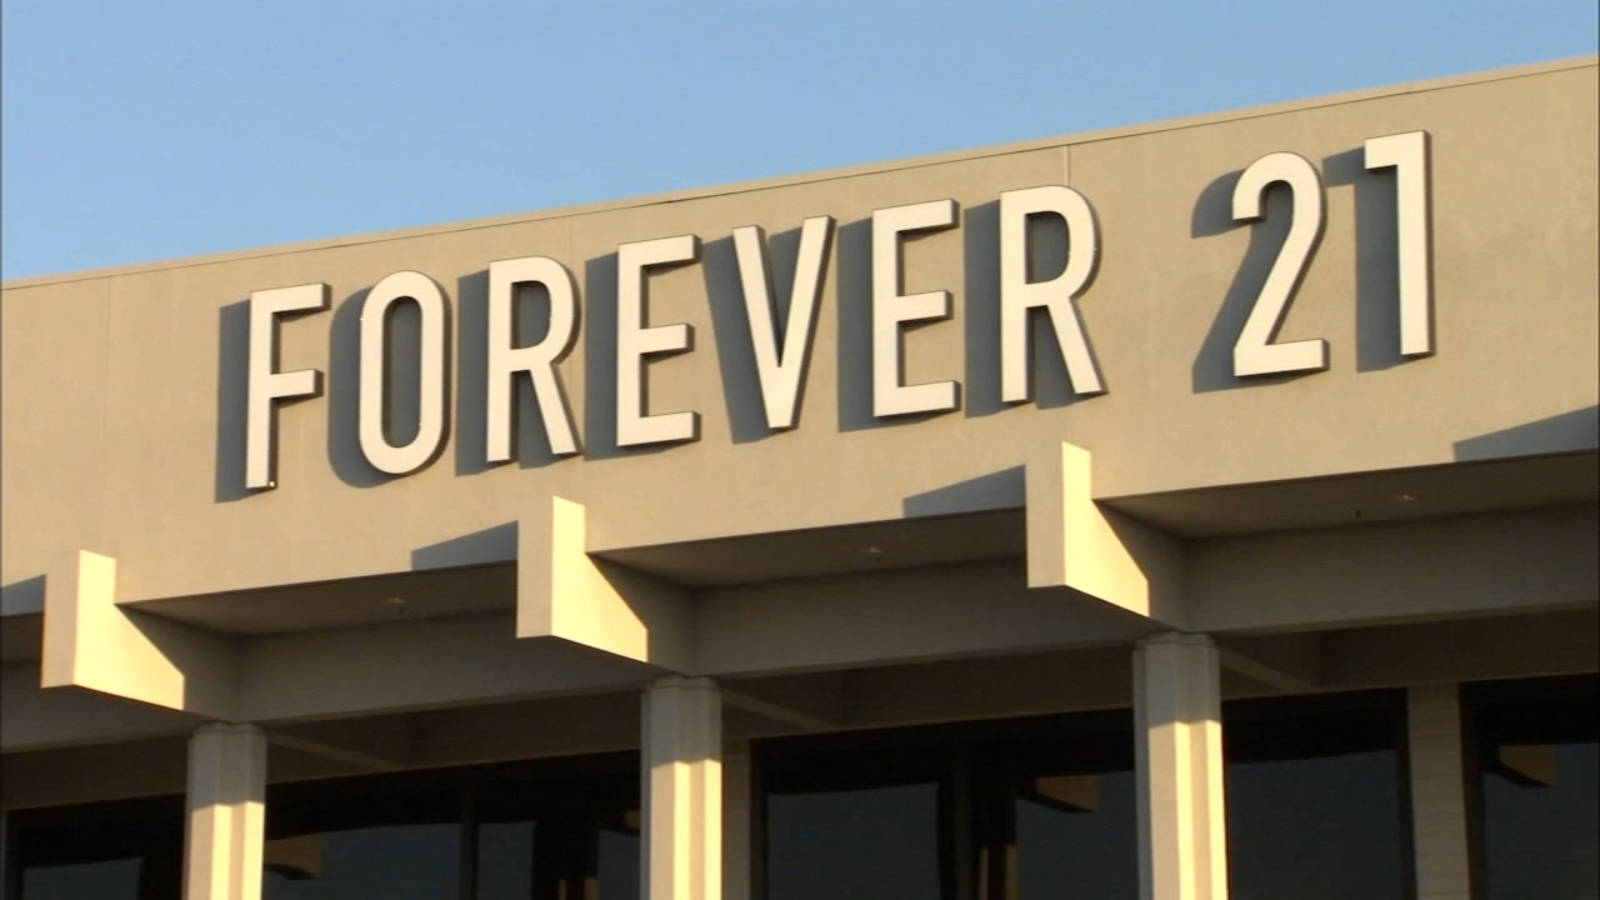 Logo Of Forever 21 In Building